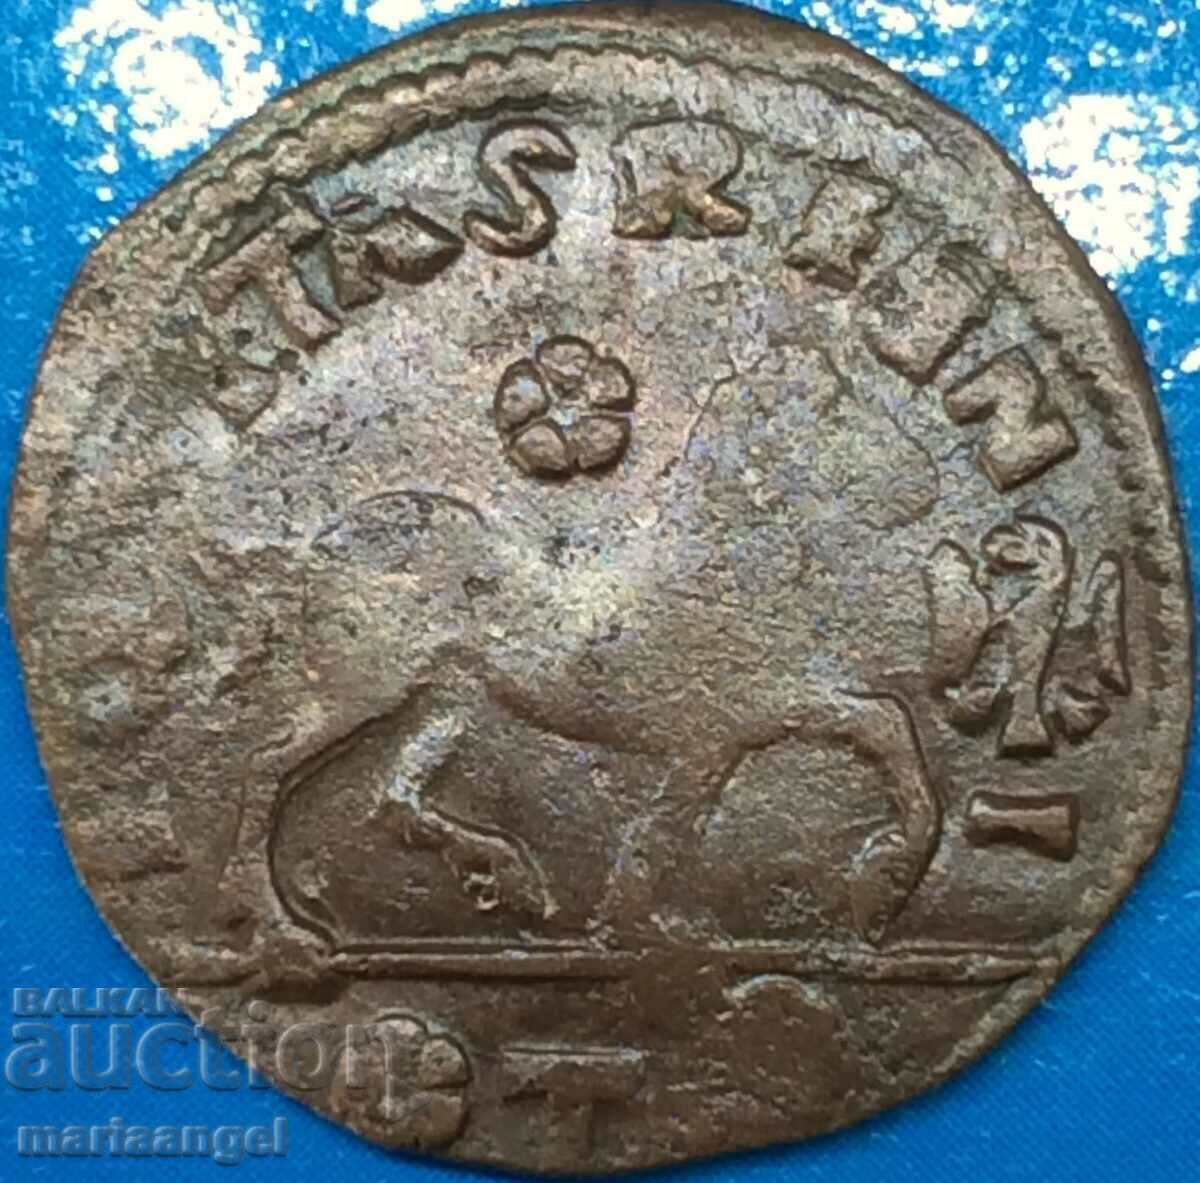 Naples 1 cavallo Ferdinand I of Aragon Italy copper